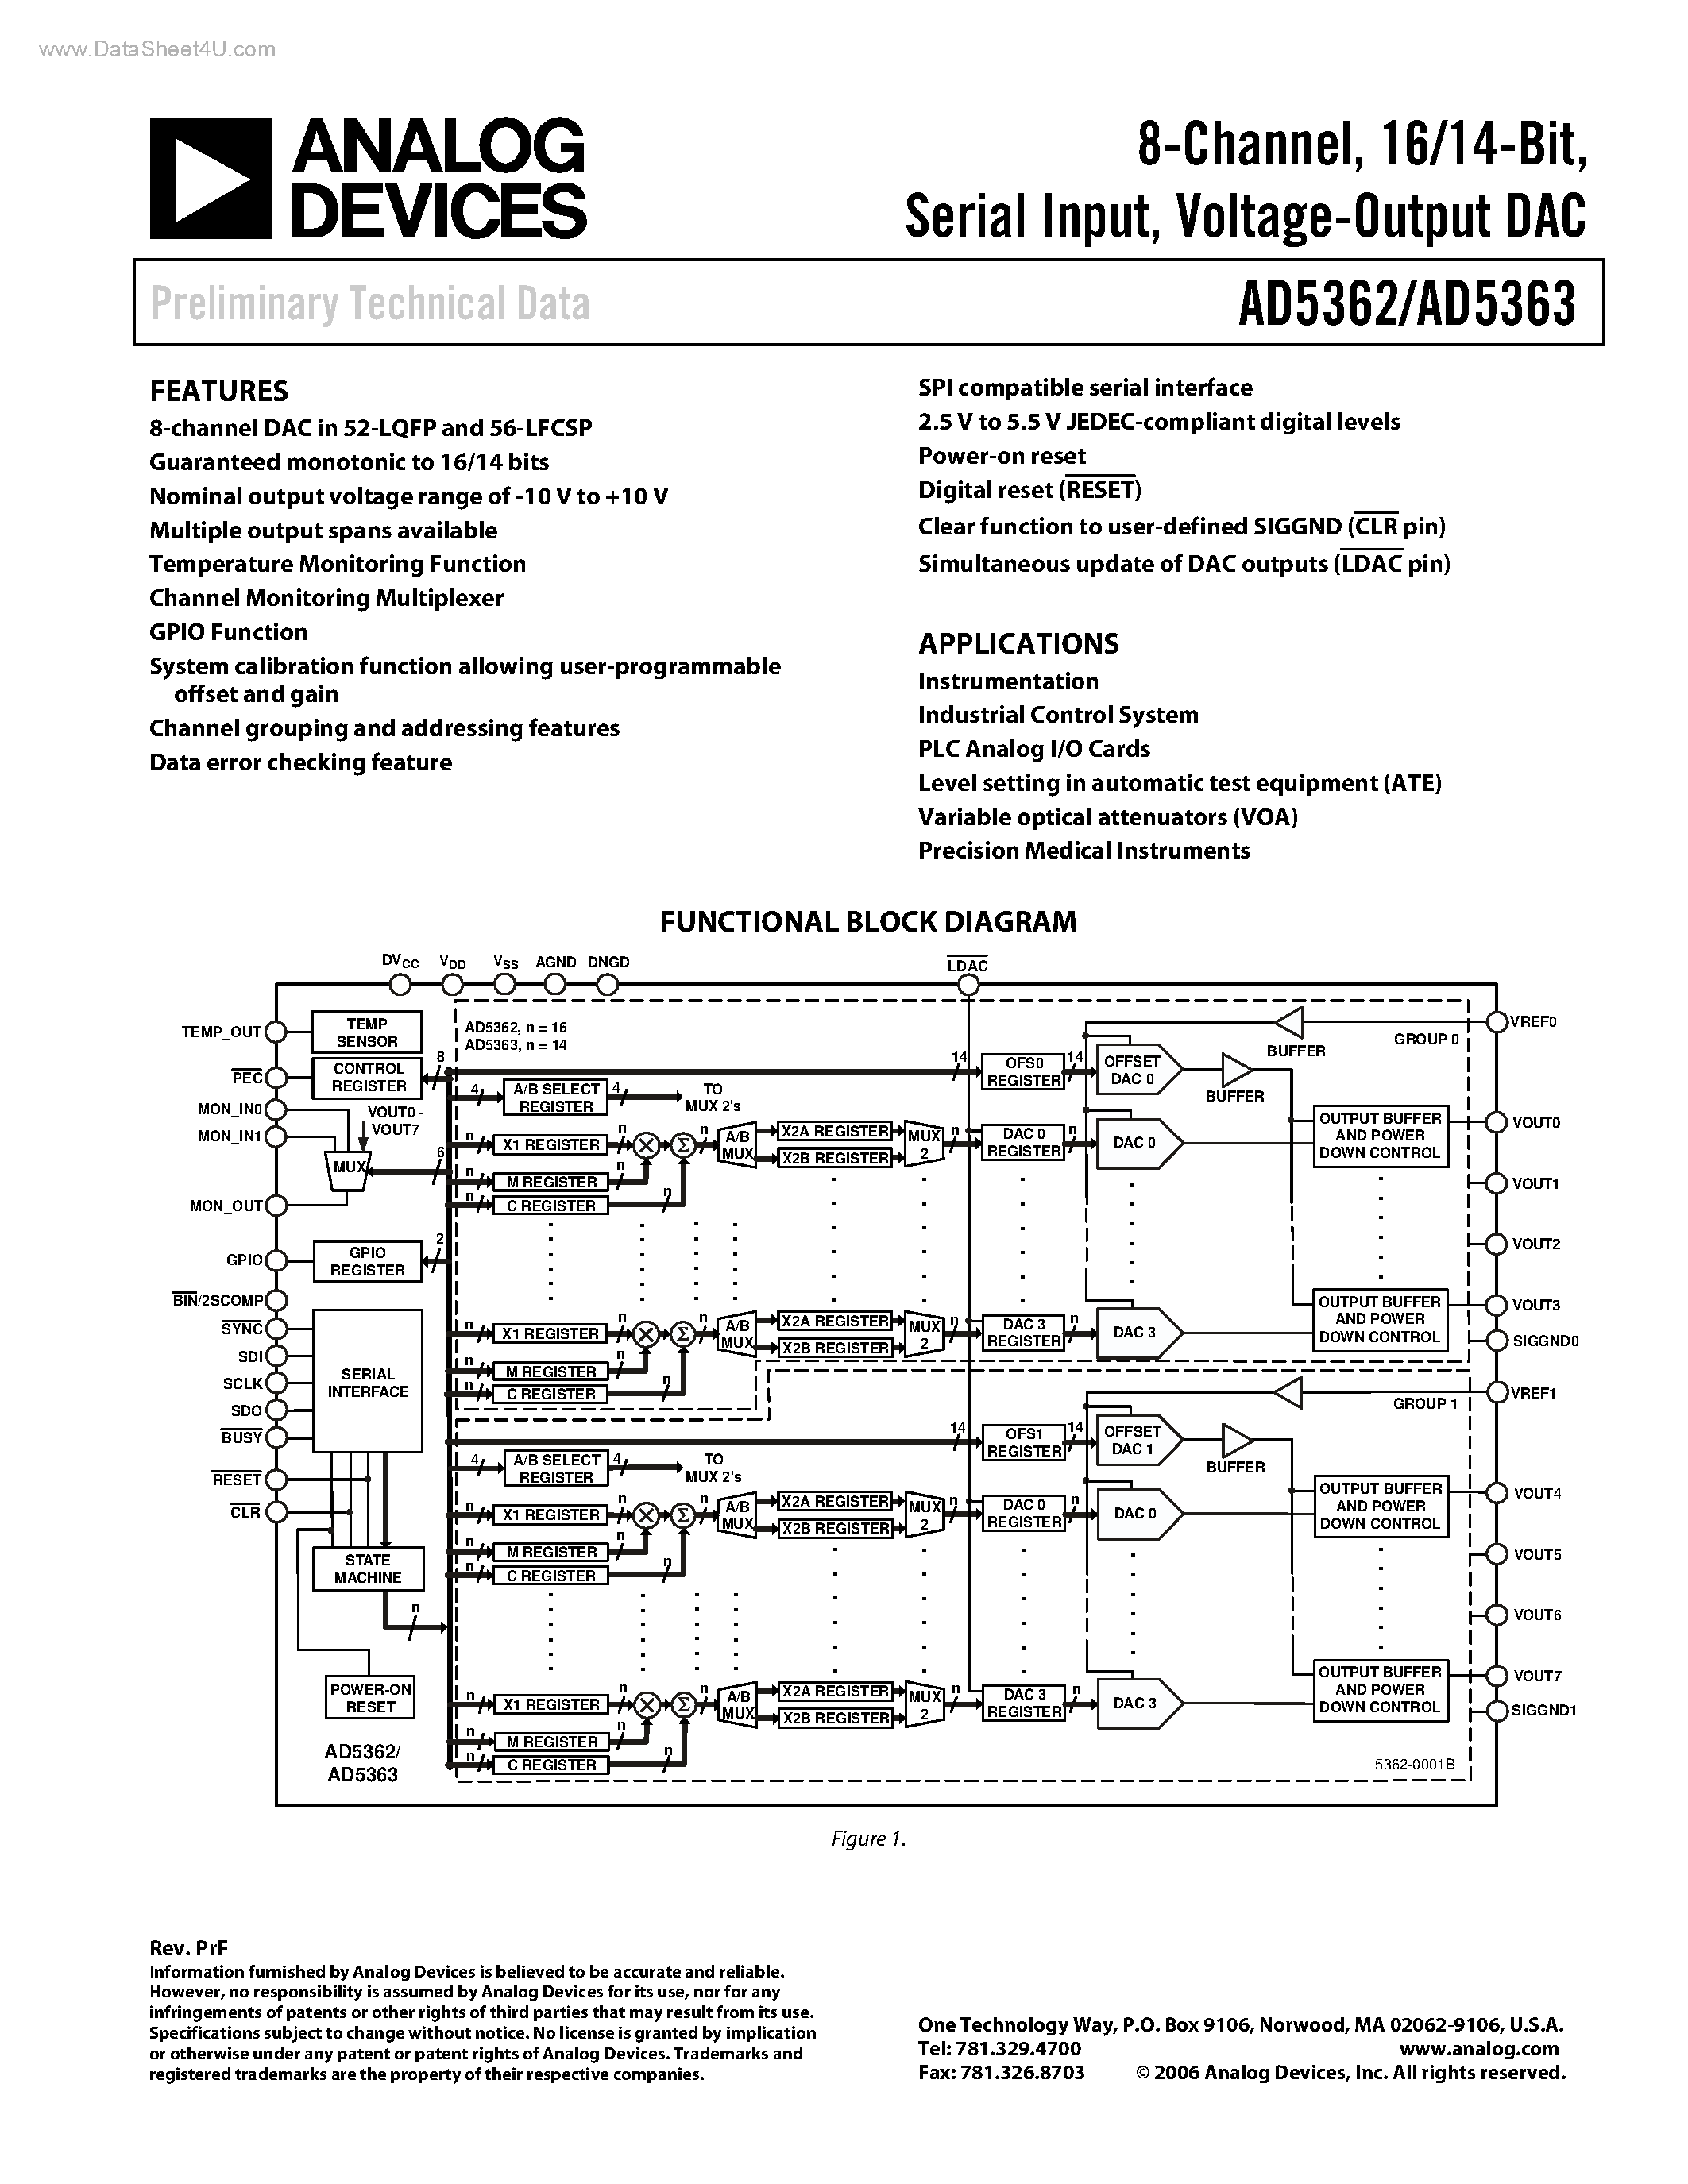 Даташит AD5362 - (AD5362 / AD5363) Voltage-Output DAC страница 1